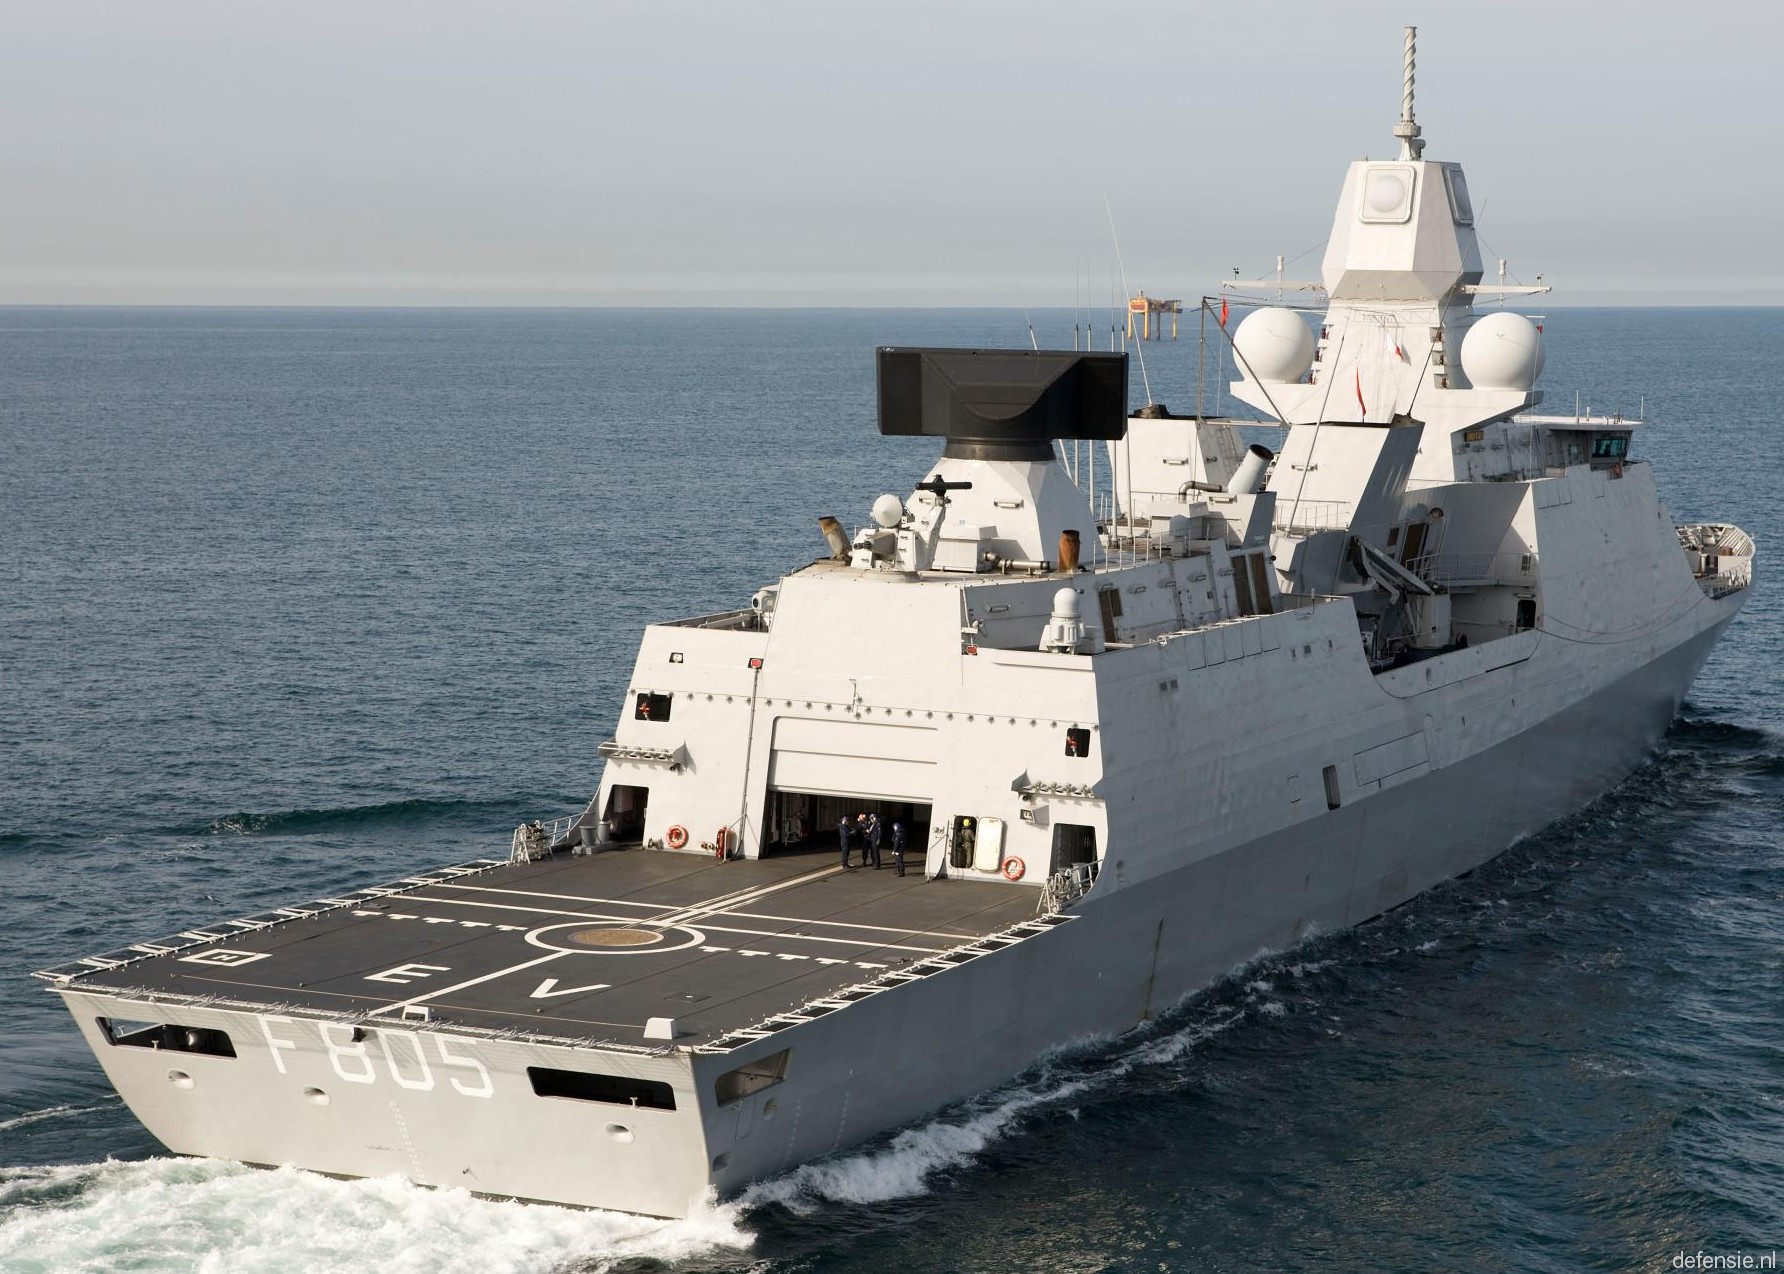 f-805 hnlms evertsen guided missile frigate ffg lcf royal netherlands navy 21 damen schelde